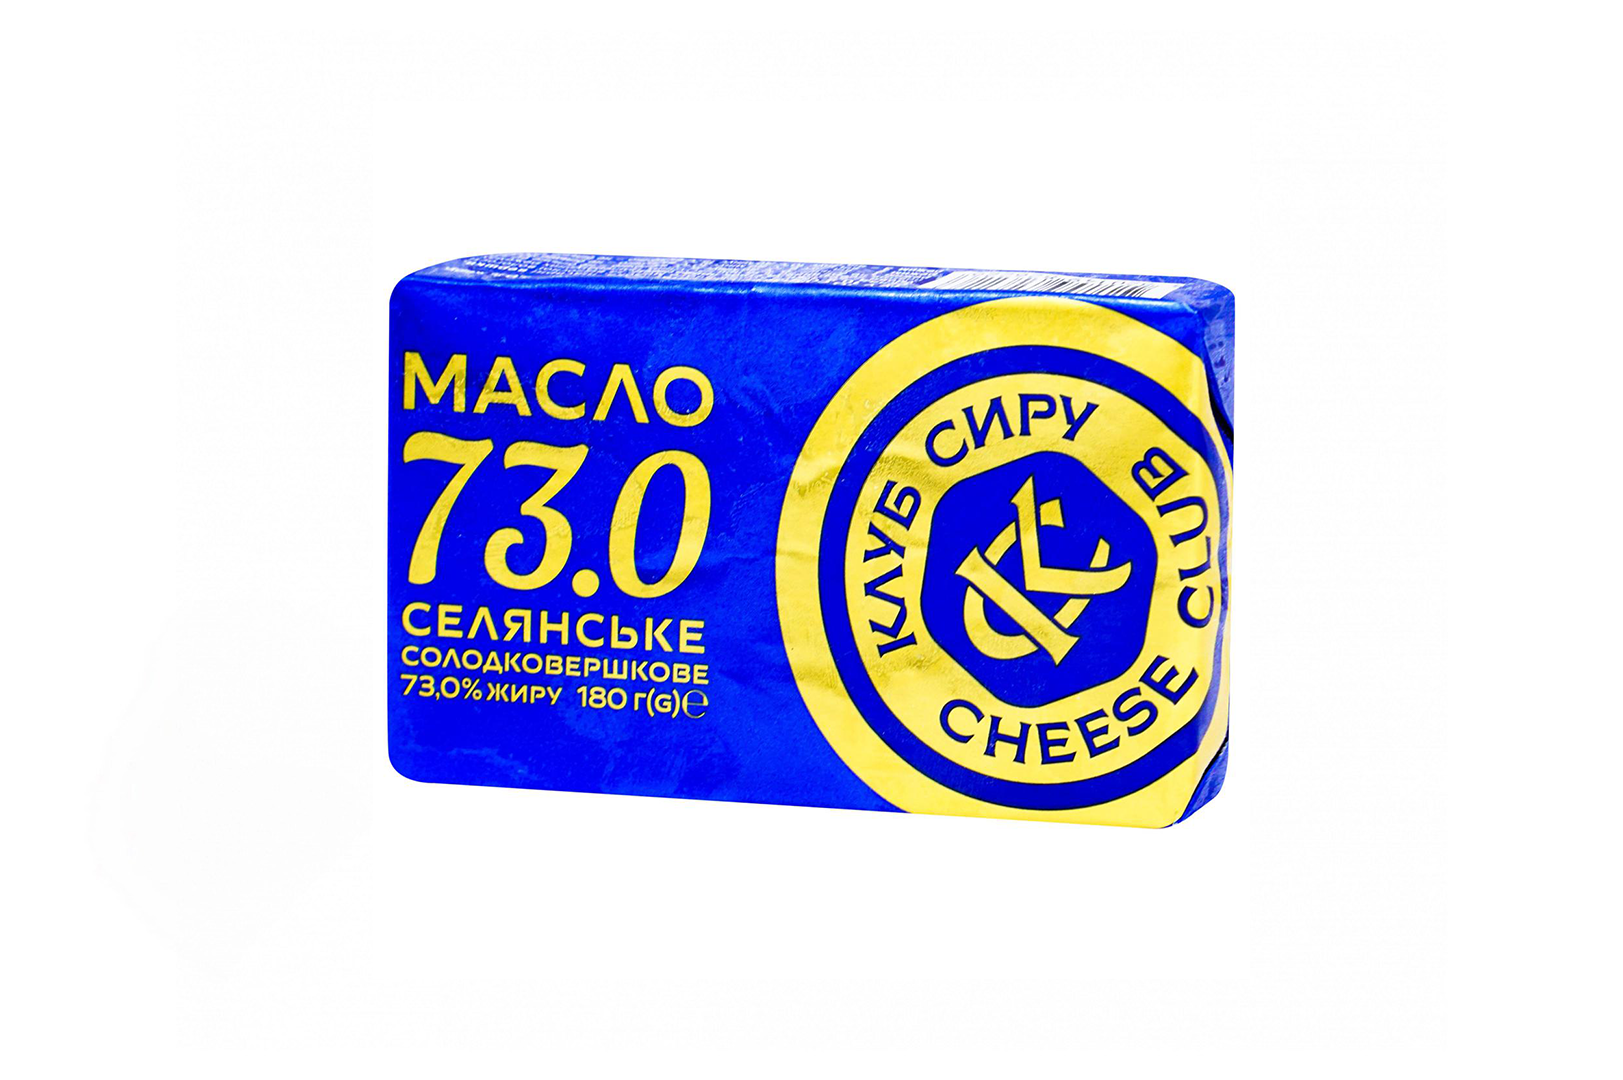 Масло ТМ “Клуб Сиру” 73% 180г